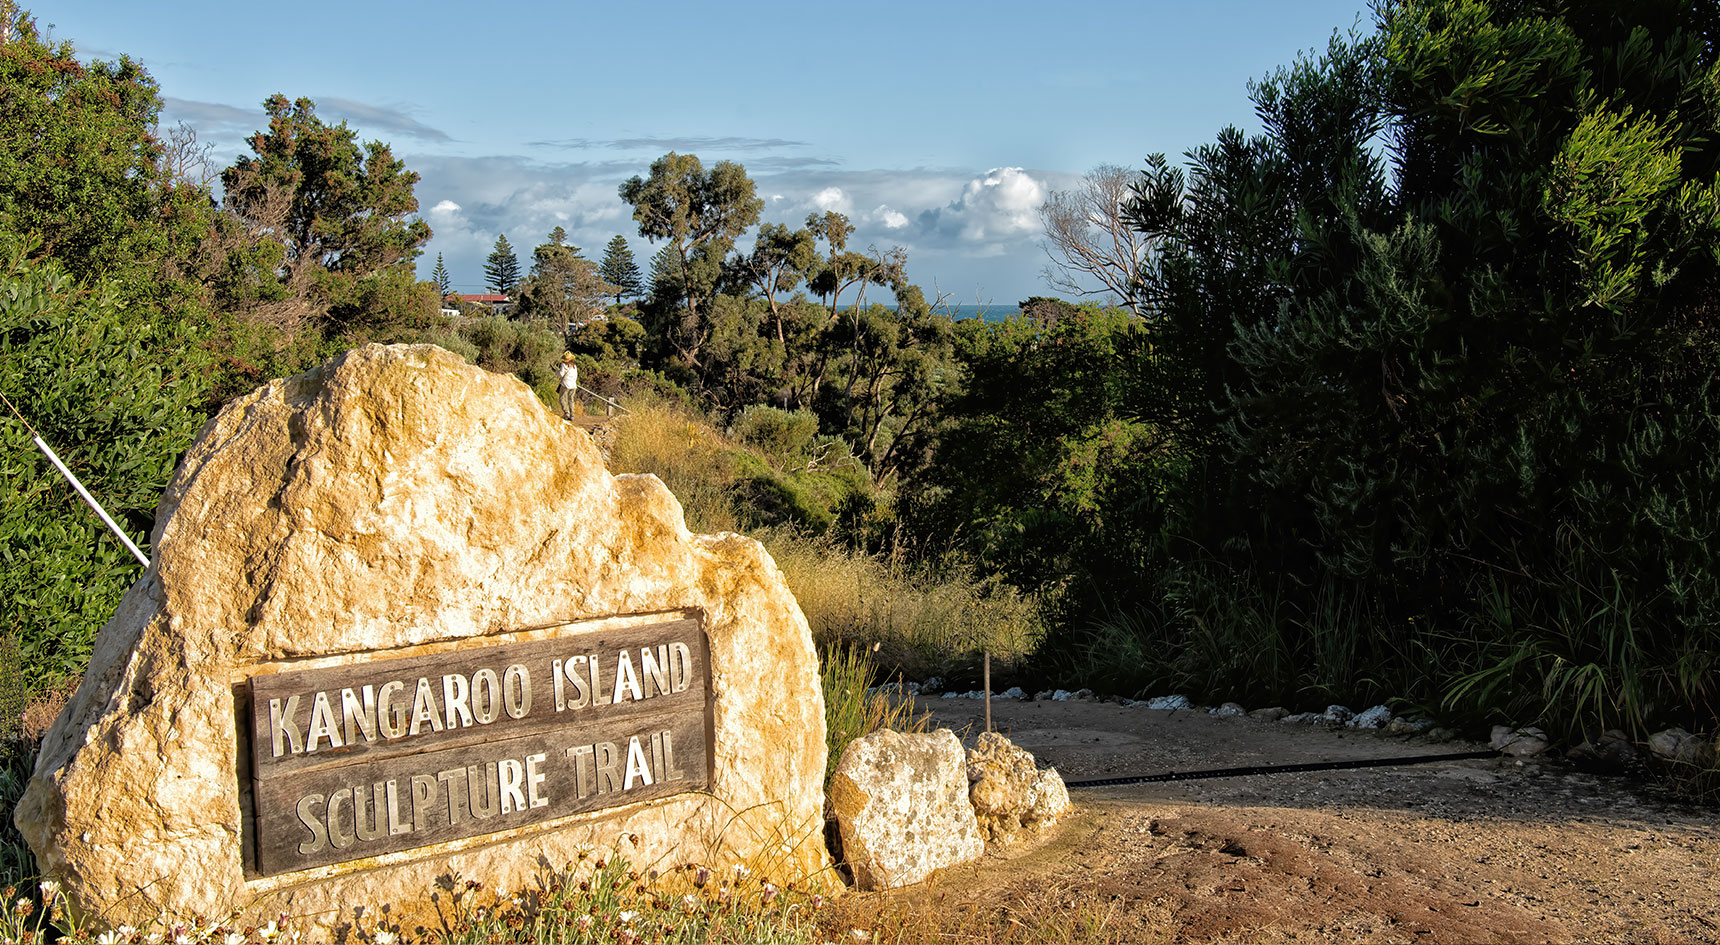 Kangaroo Island Sculpture Trail sign on a rock